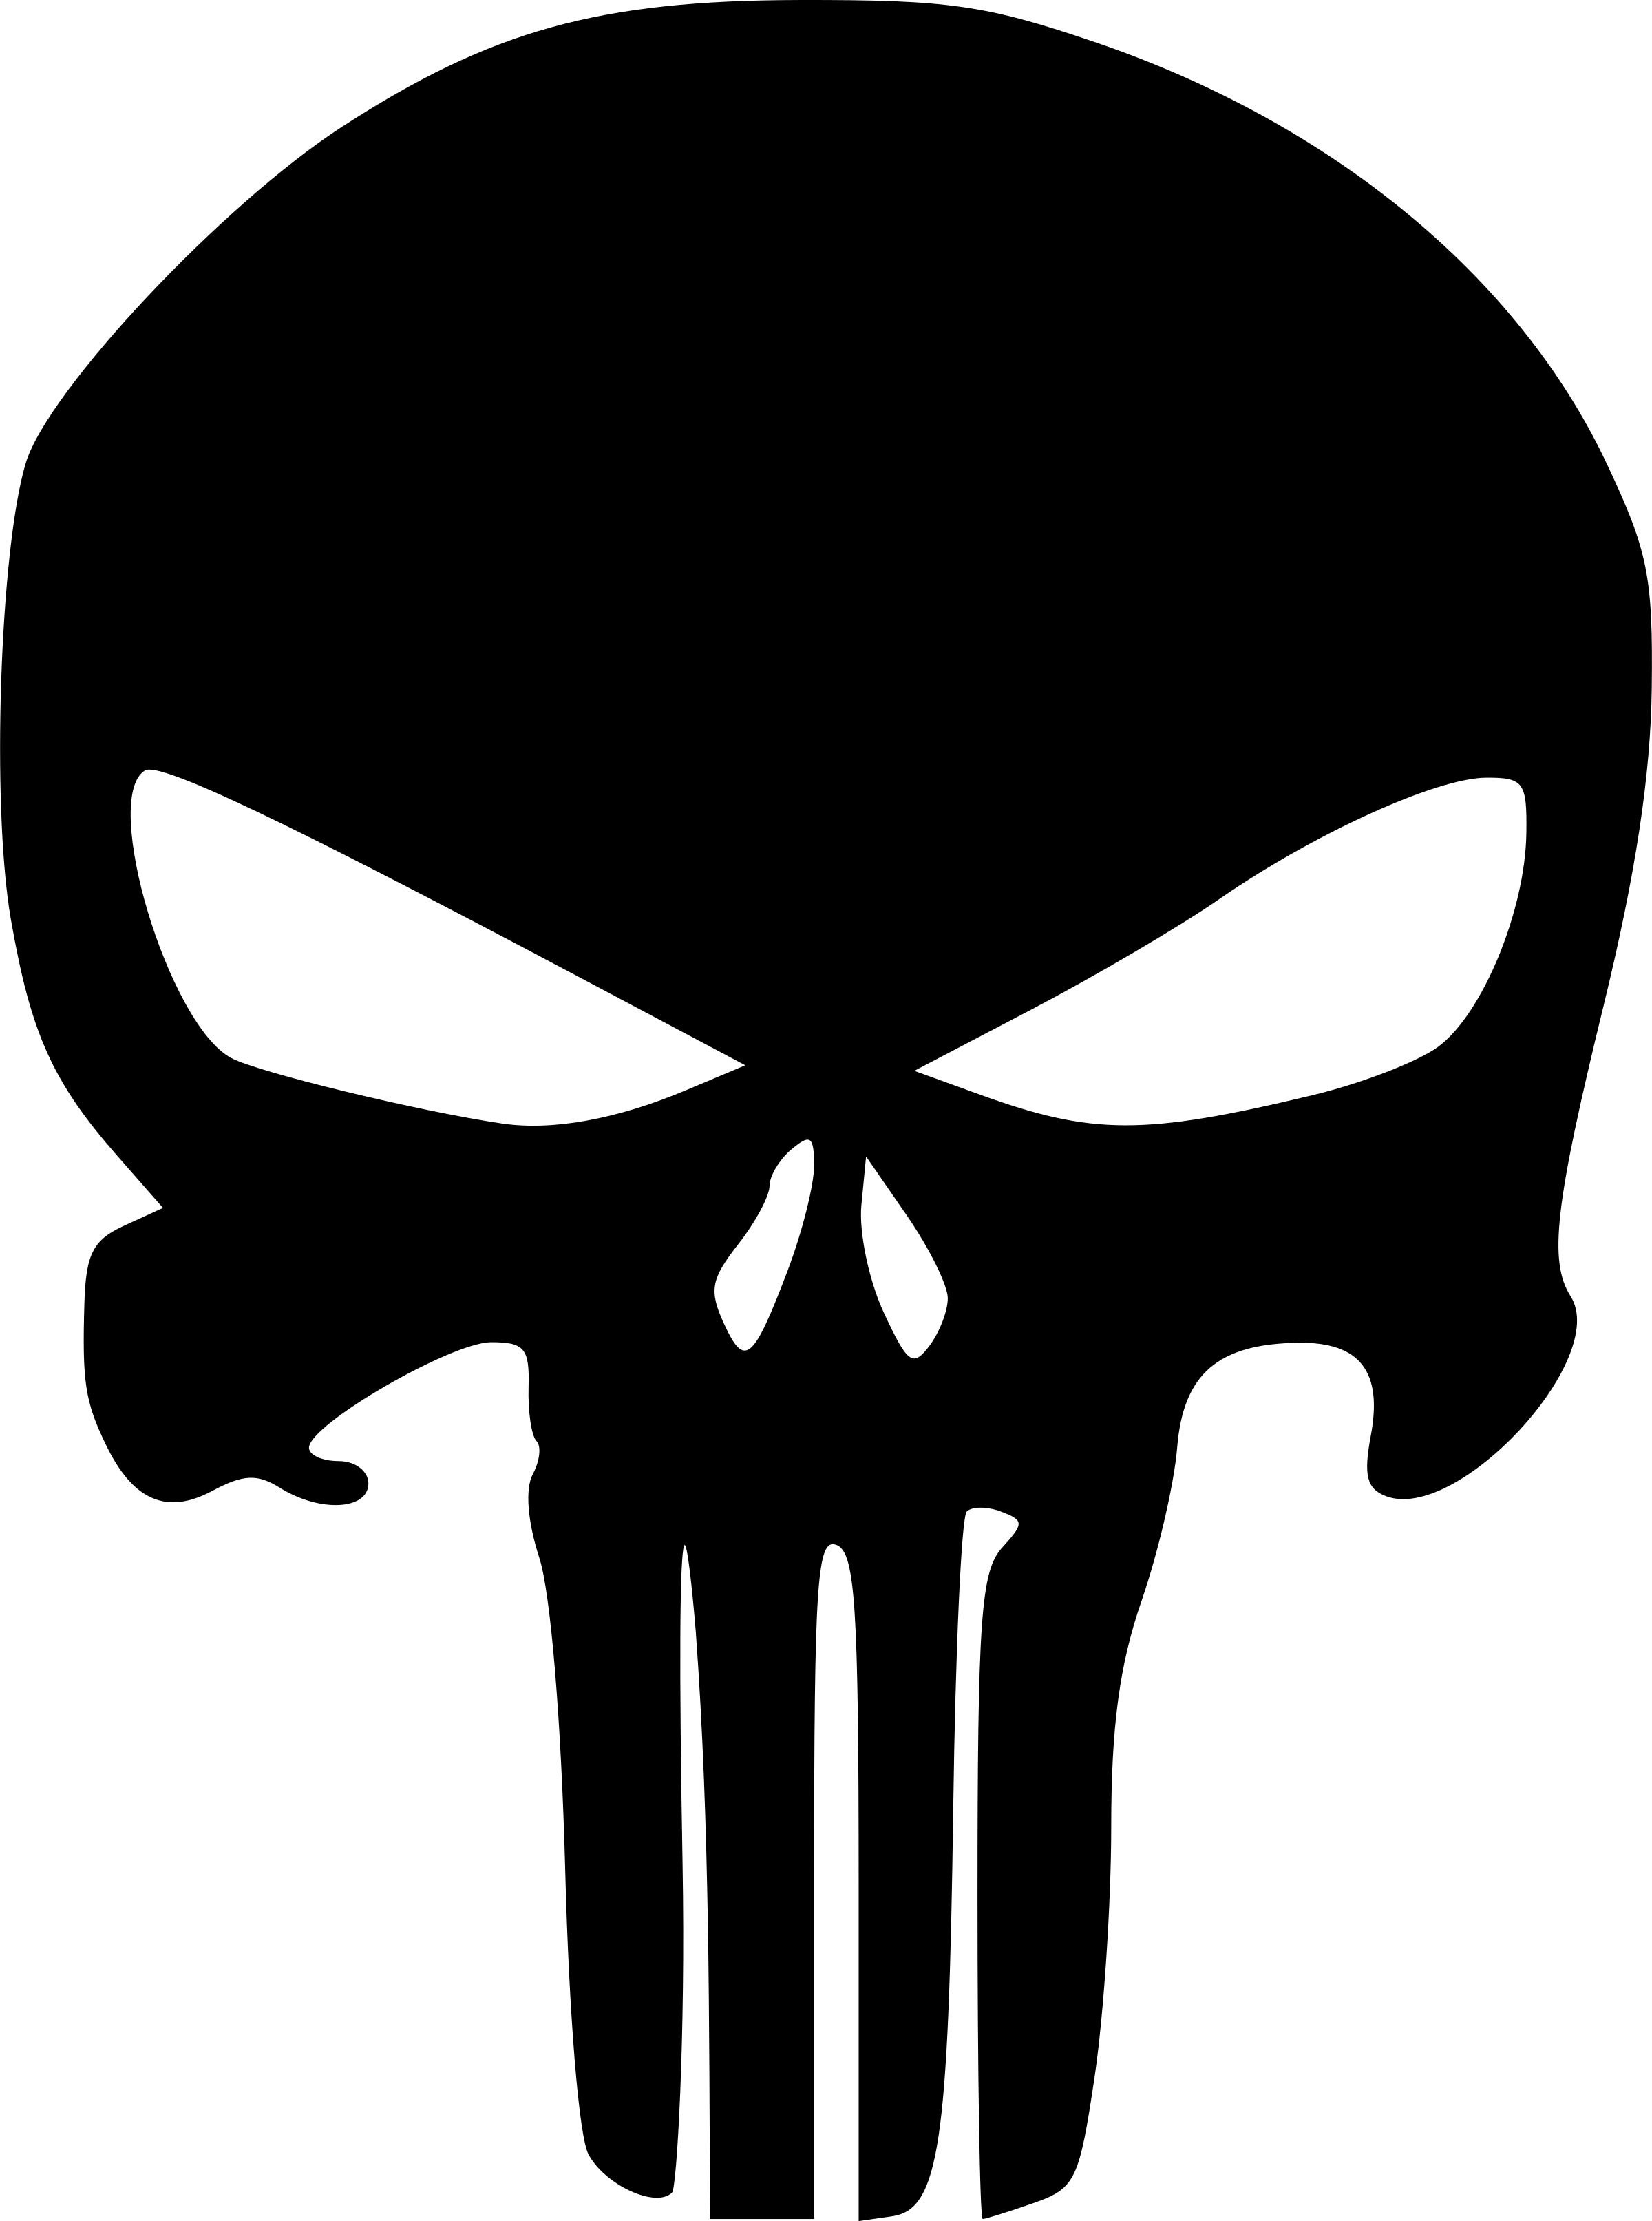 Punisher White Logo - The Punisher Logo PNG Transparent & SVG Vector - Freebie Supply